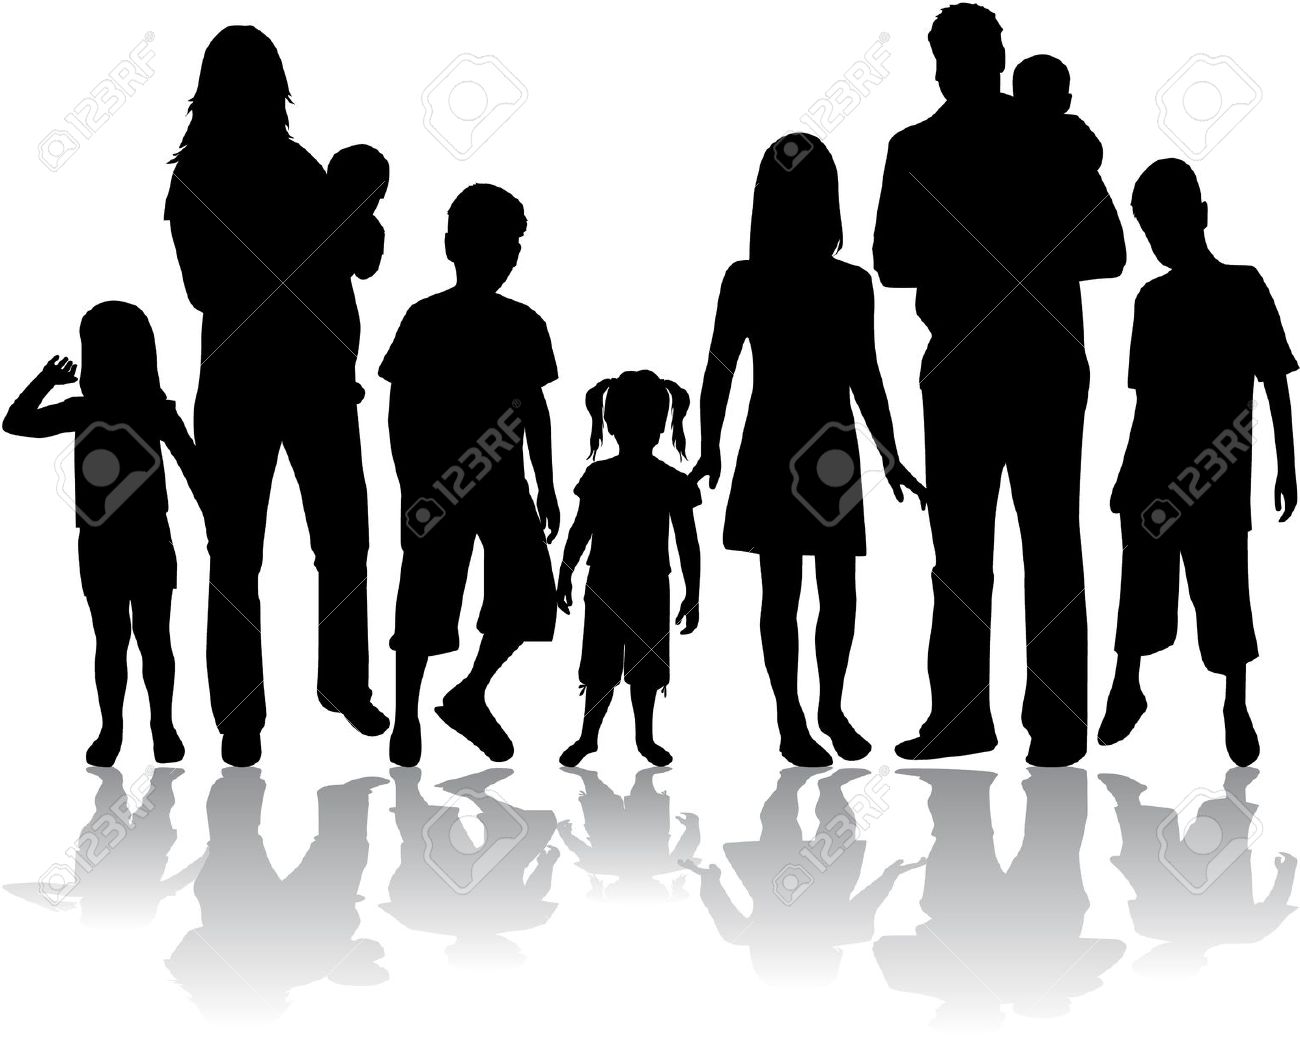 large family: Profiles of large family Illustration